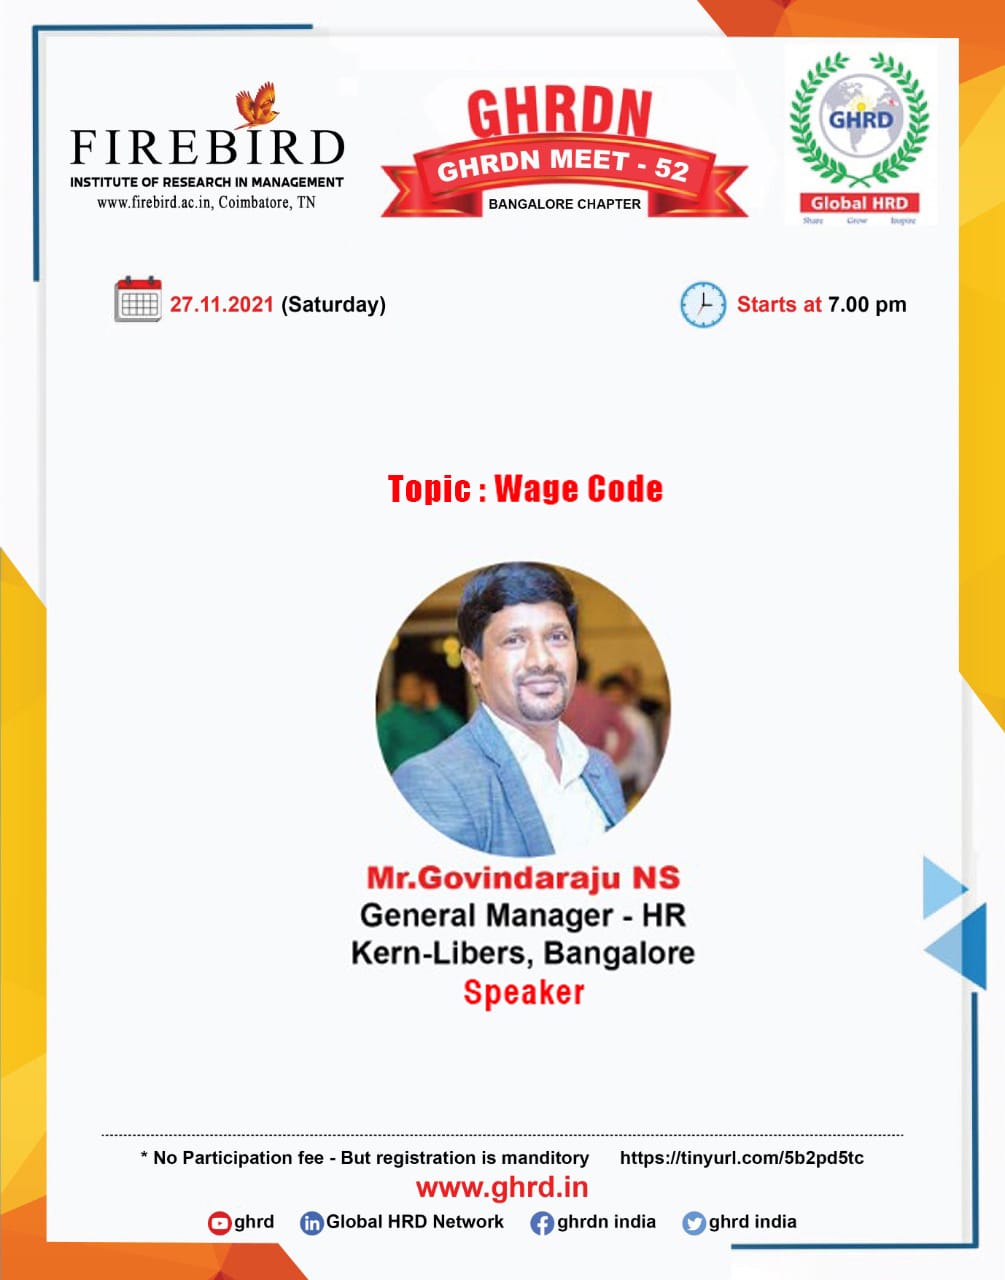 Firebird Ghrdn 52 Virtual Meet Organized by Ghrdn Banglore Chapter